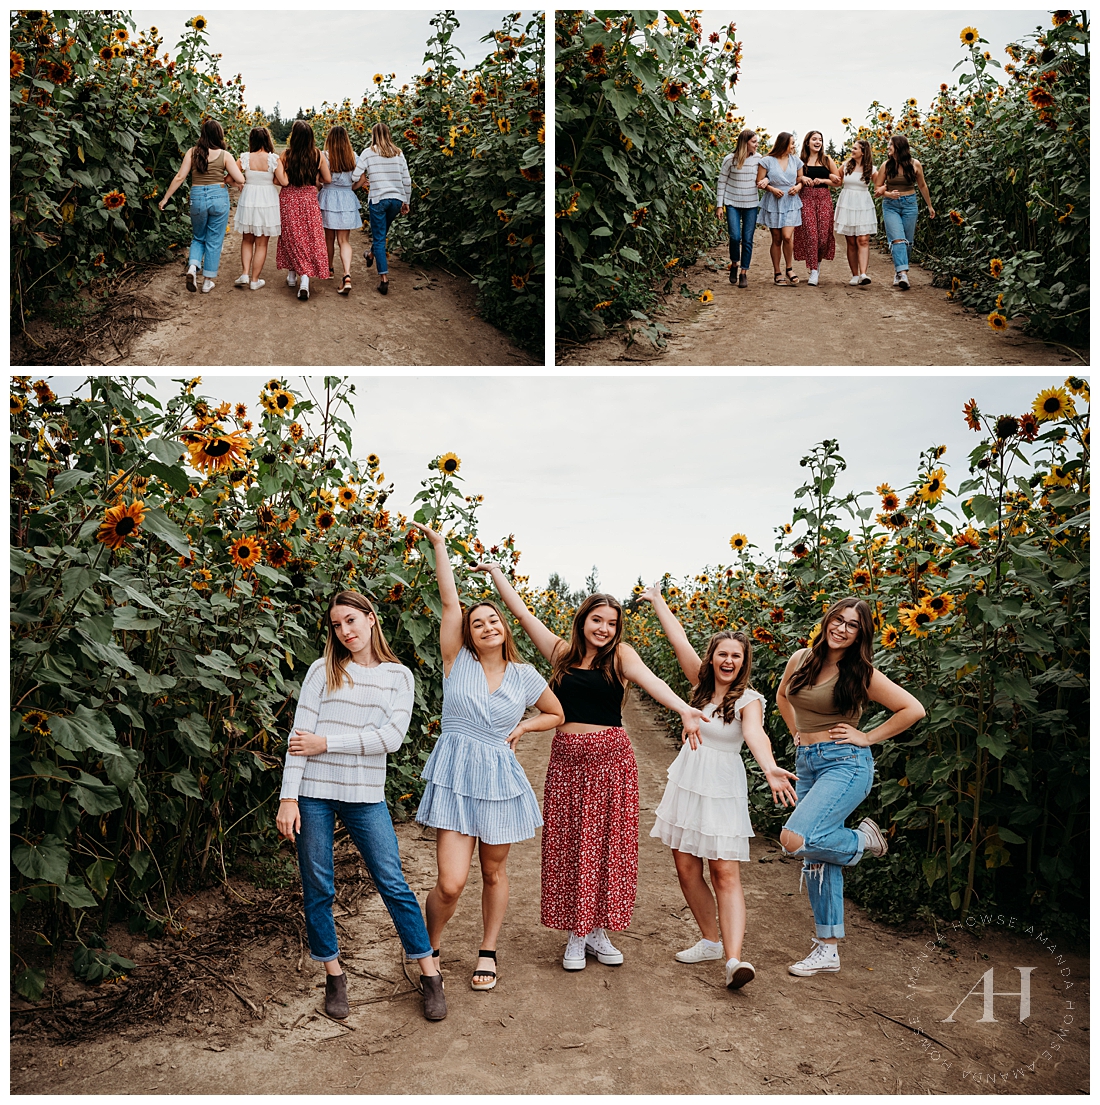 PNW High School Model Team Portraits | Field of Sunflowers | Photographed by the Best Tacoma, Washington Senior Photographer Amanda Howse Photography